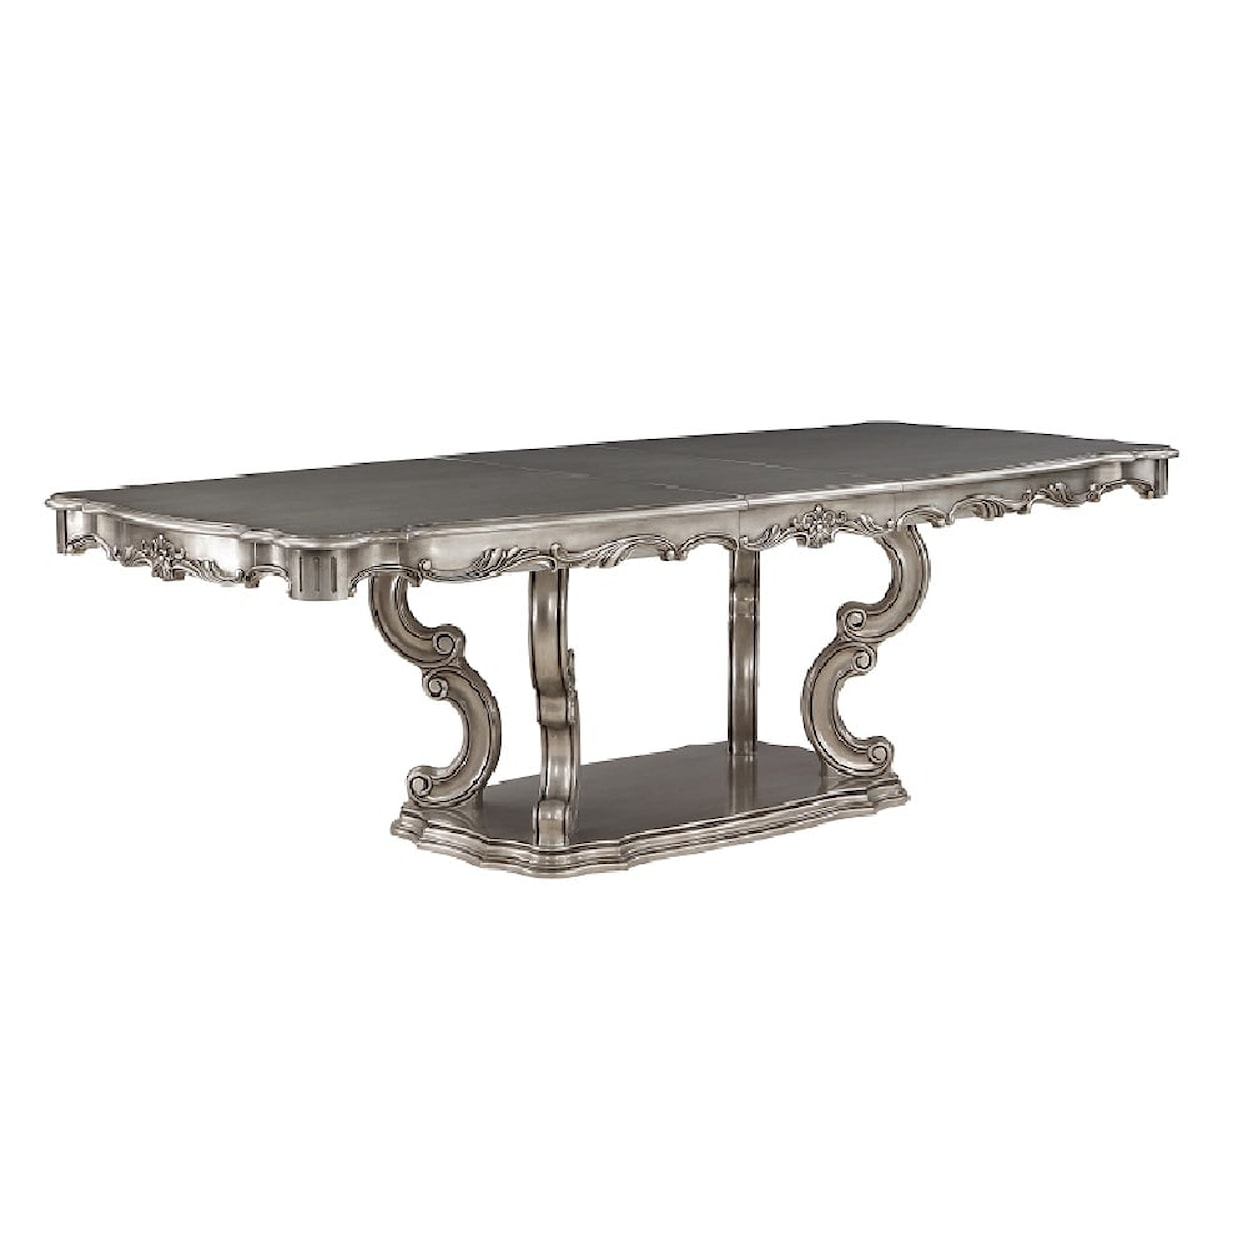 Acme Furniture Ariadne Dining Table W/Pedestal